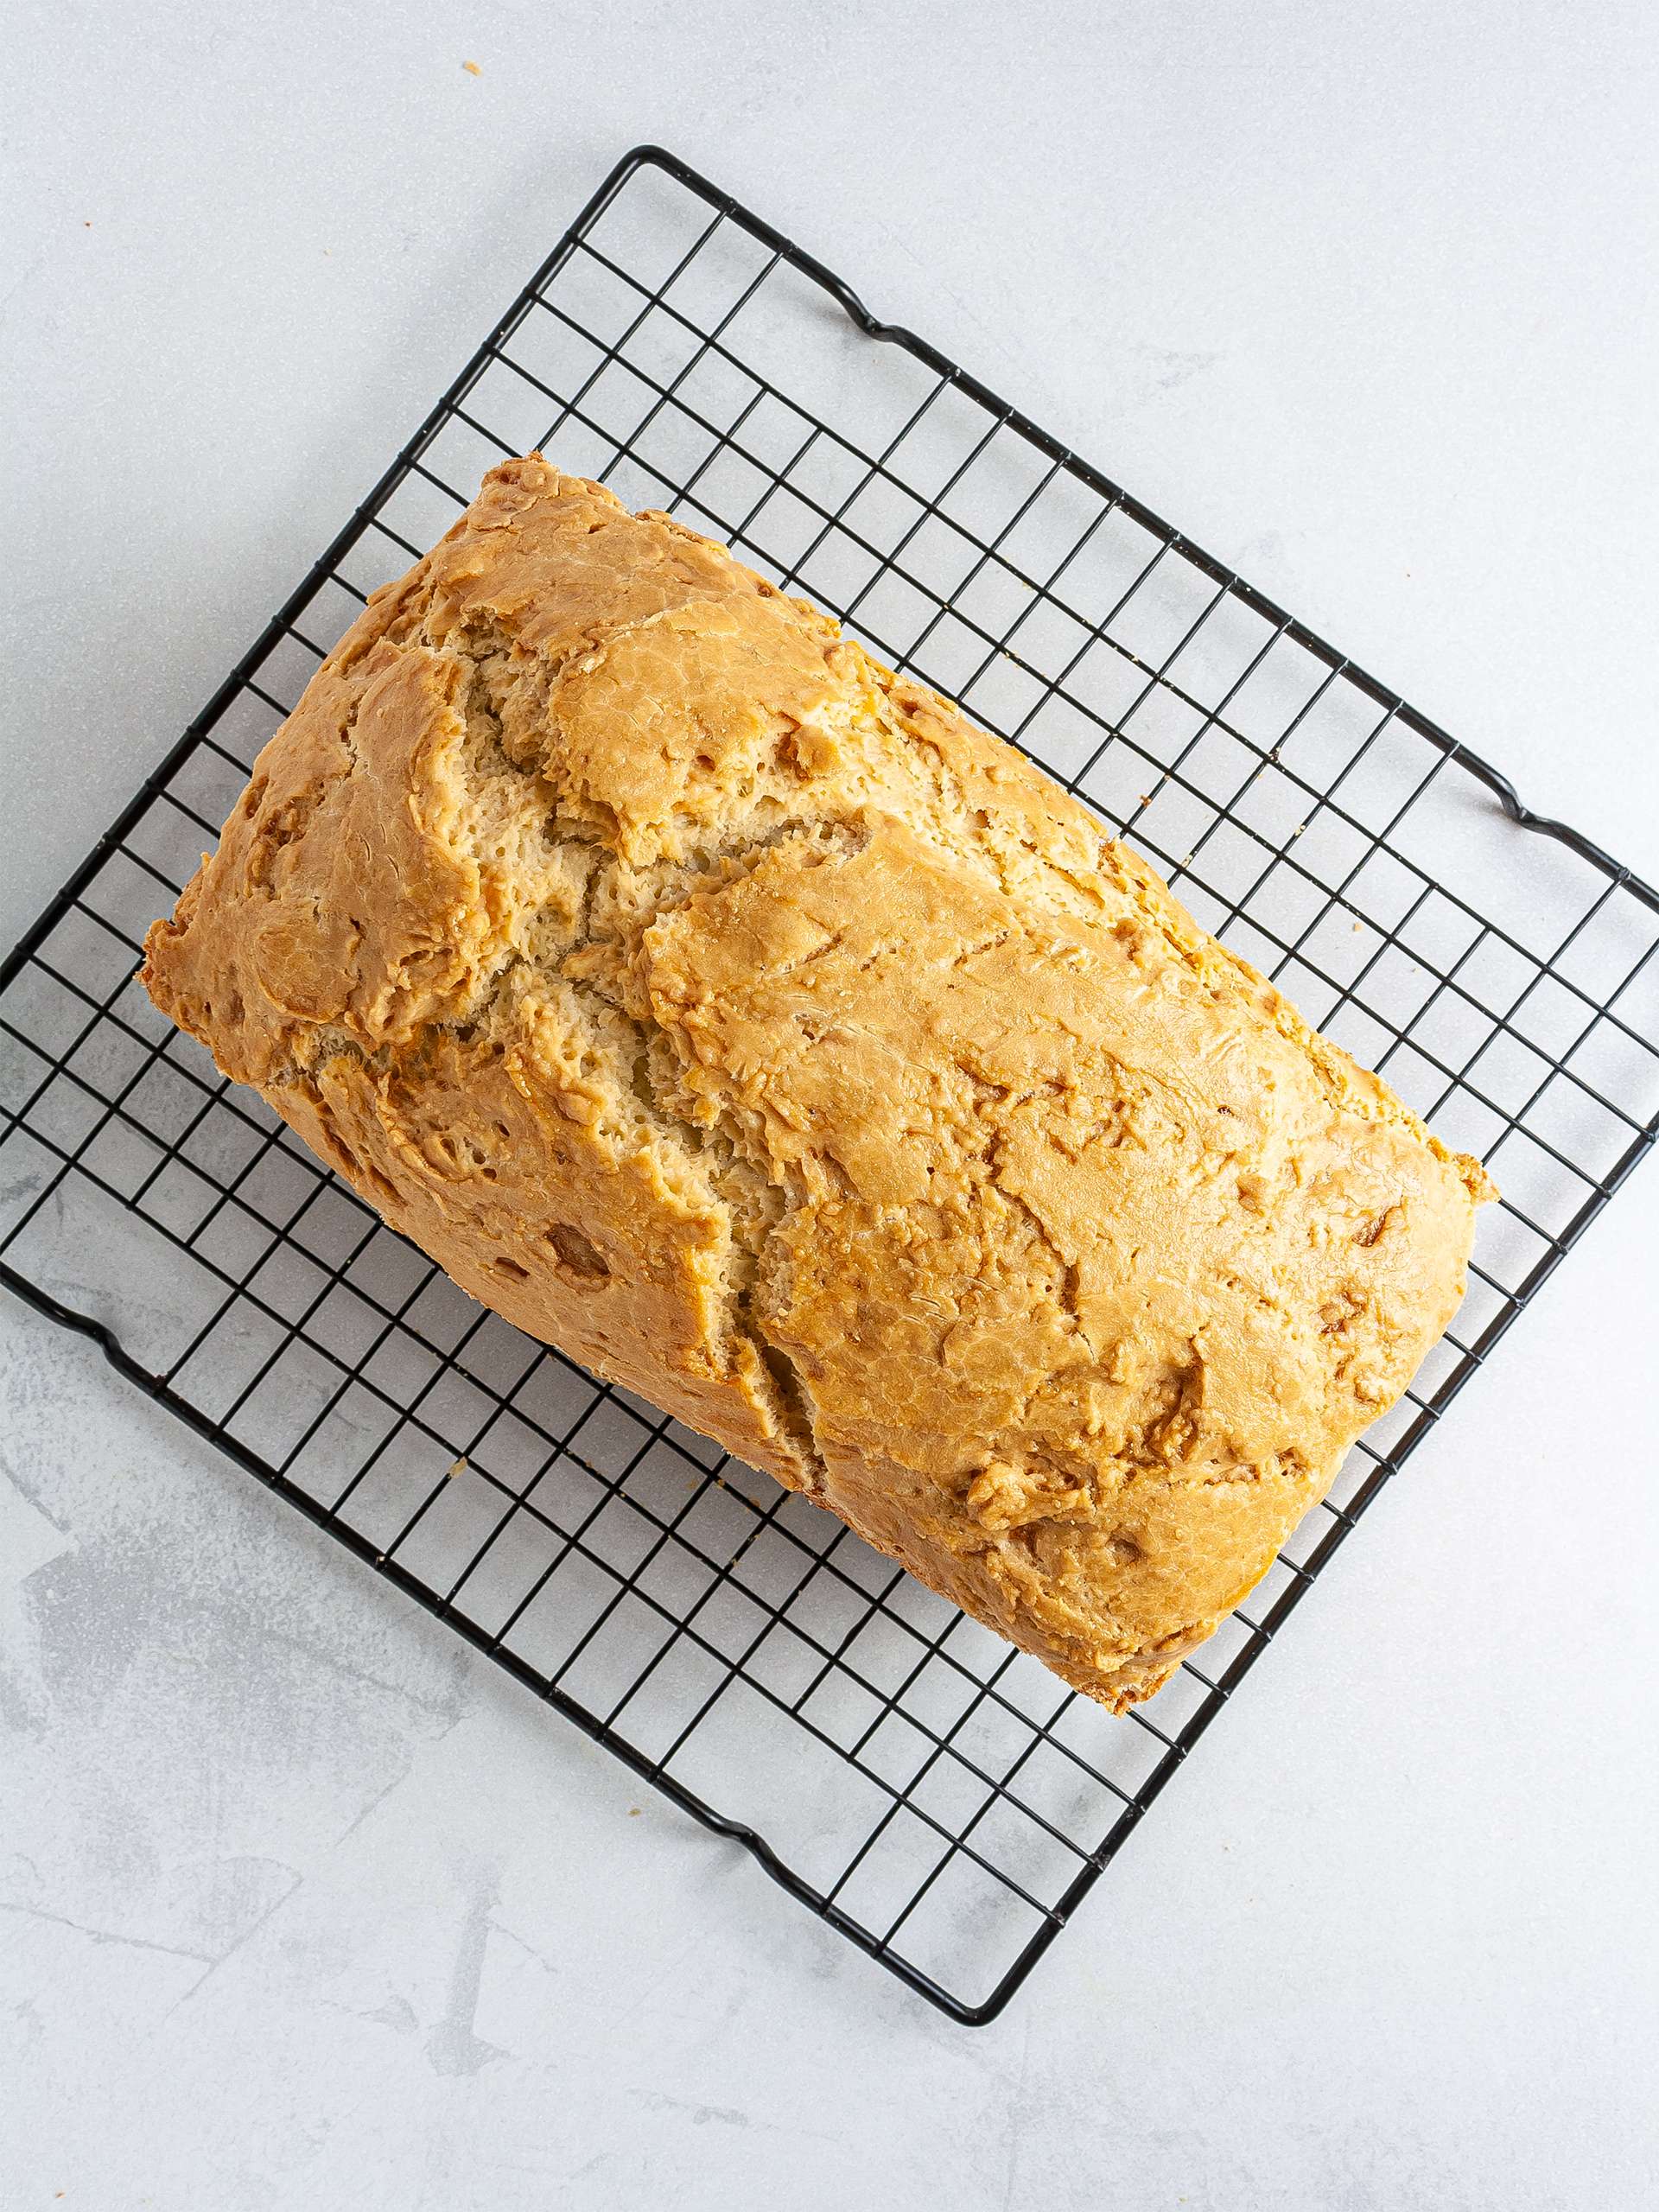 Baked brioche bread